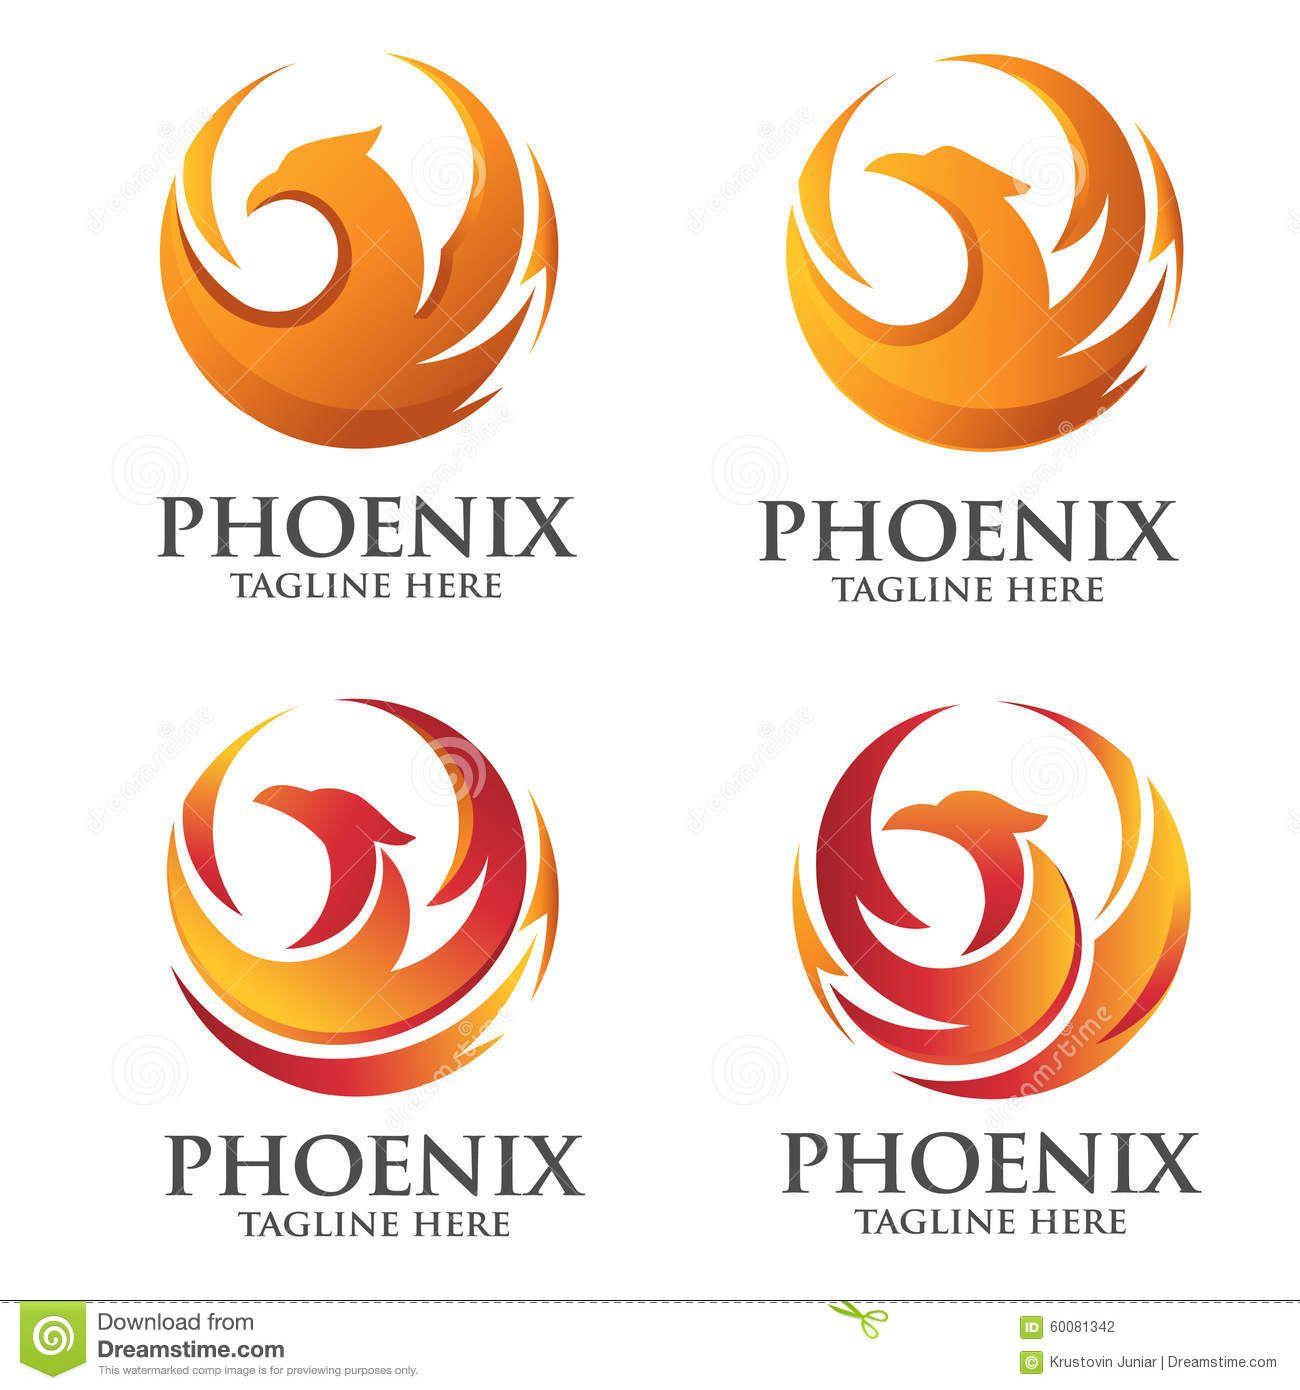 City of Phoenix Bird Logo - logo redo--is this the city of Phoenix logo from wikipedia? | Logo ...